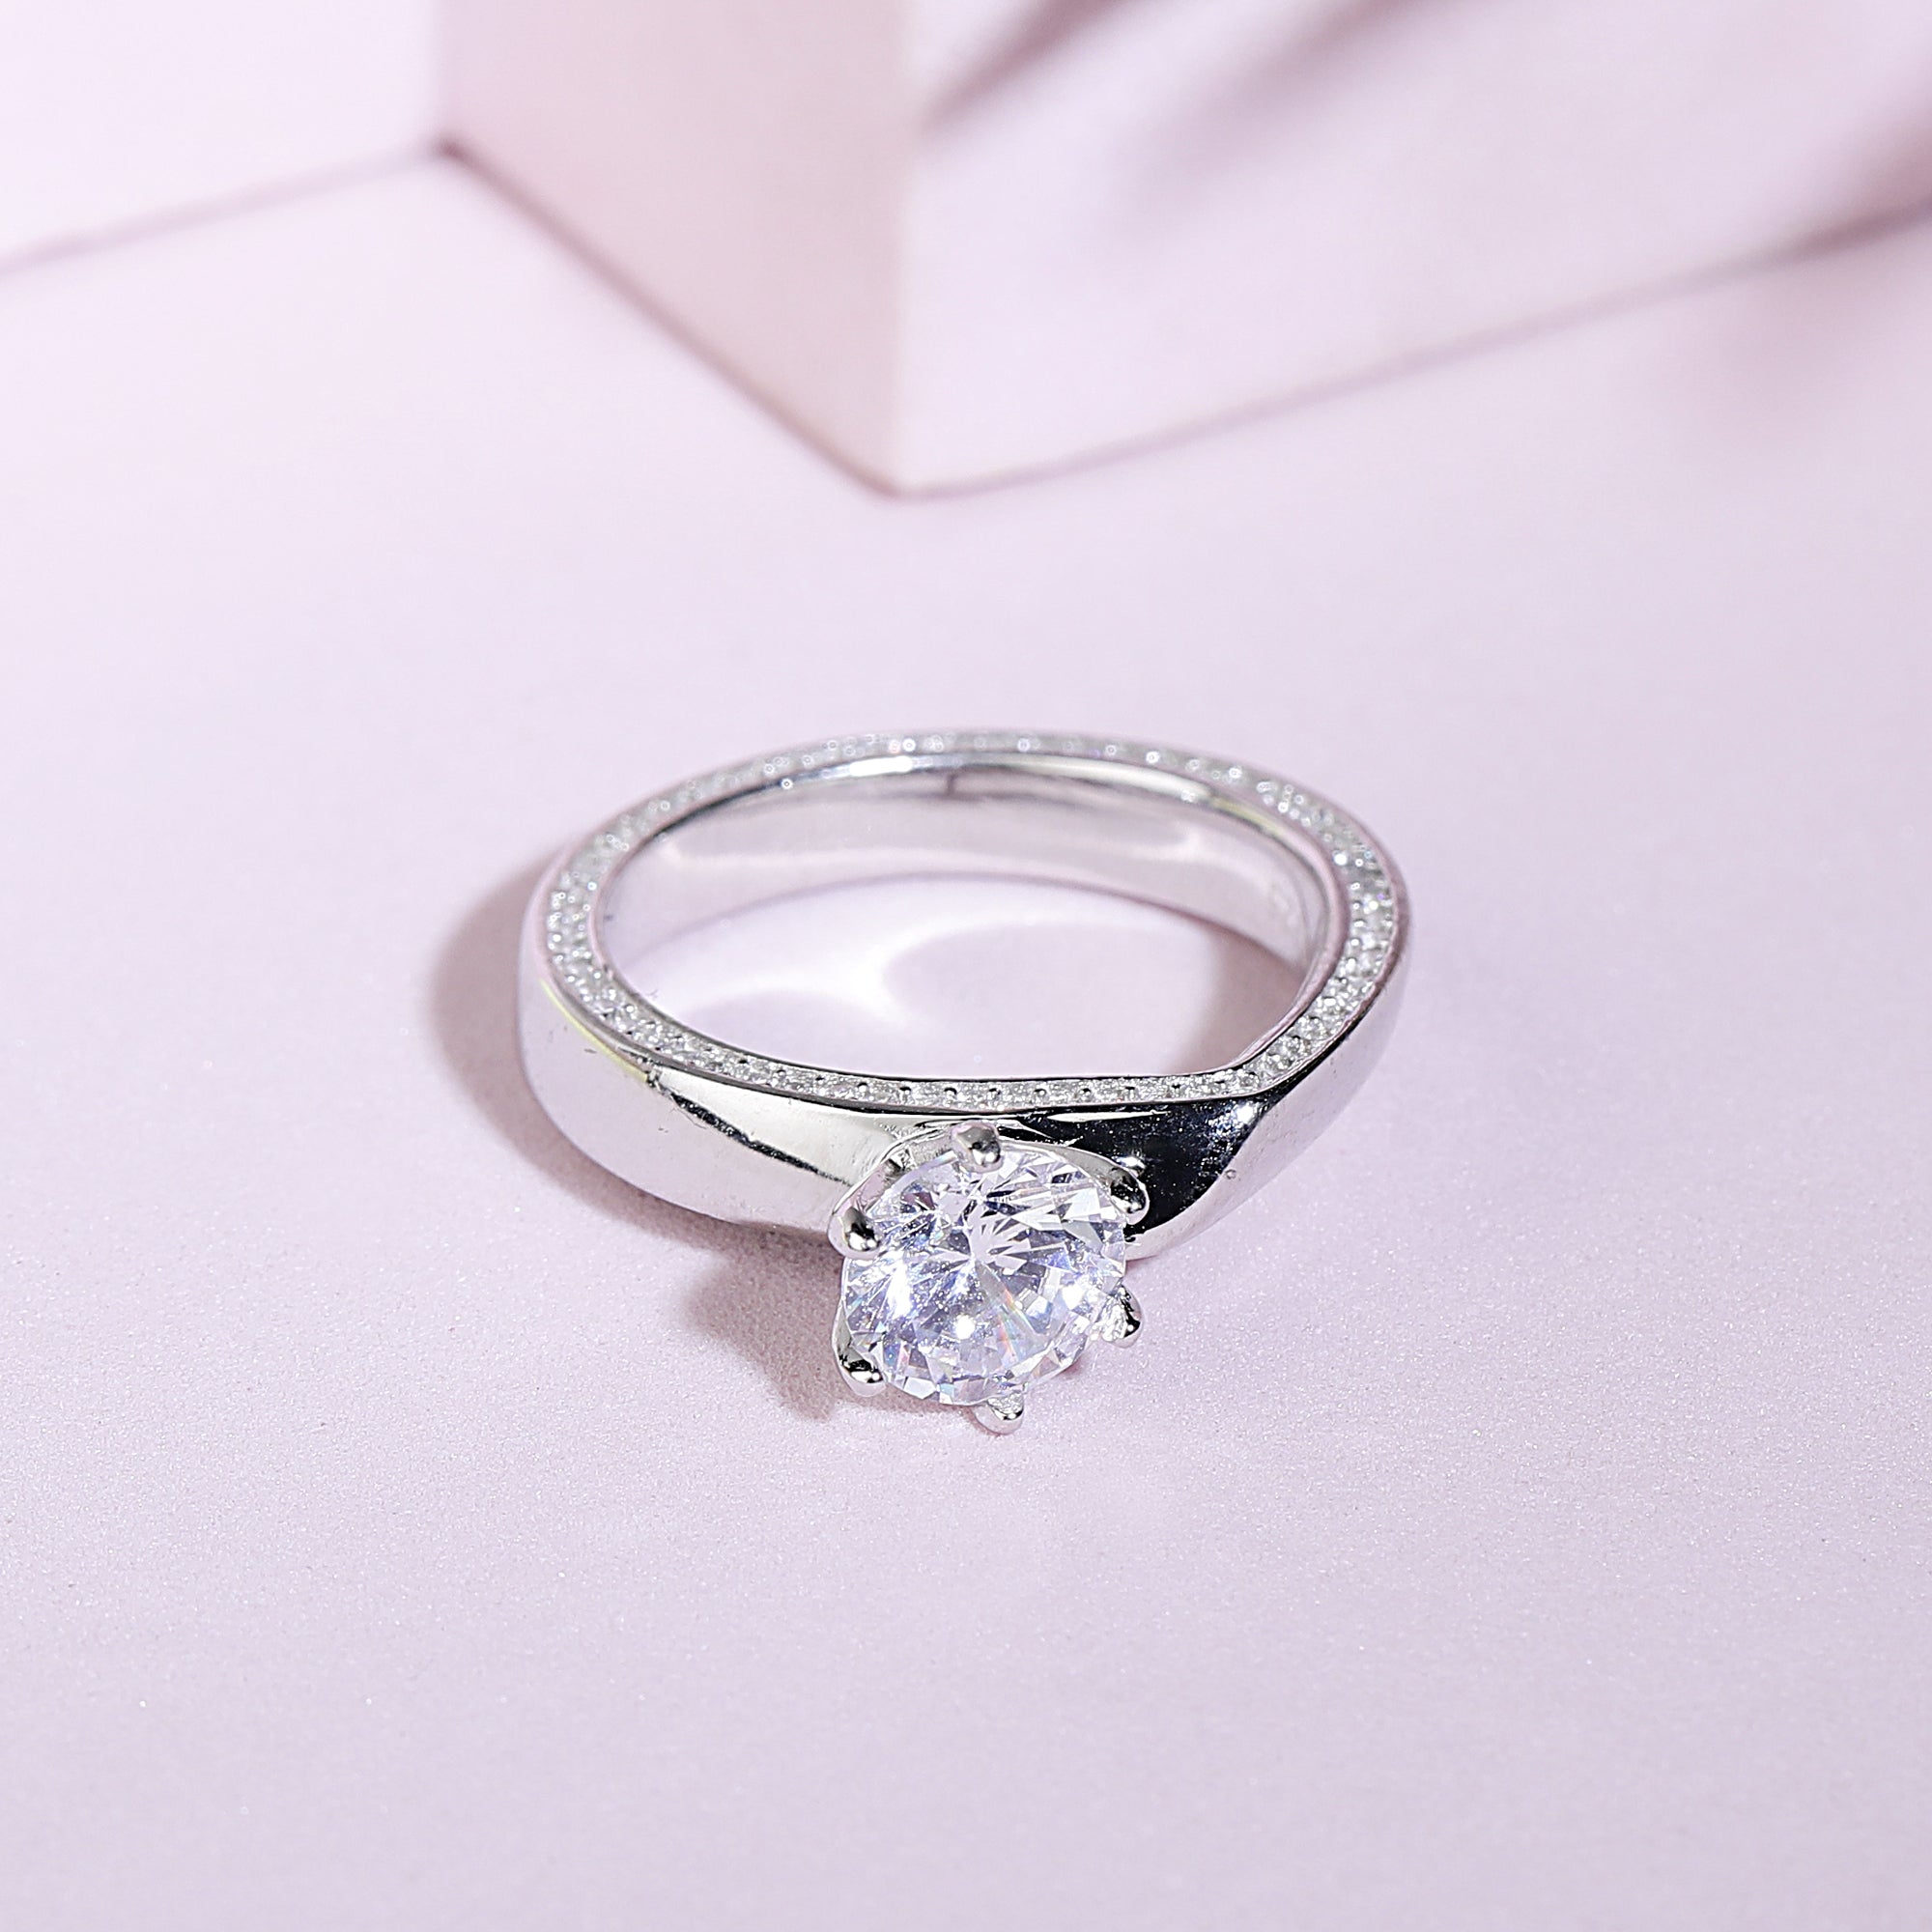 Pear shape band diamond ring